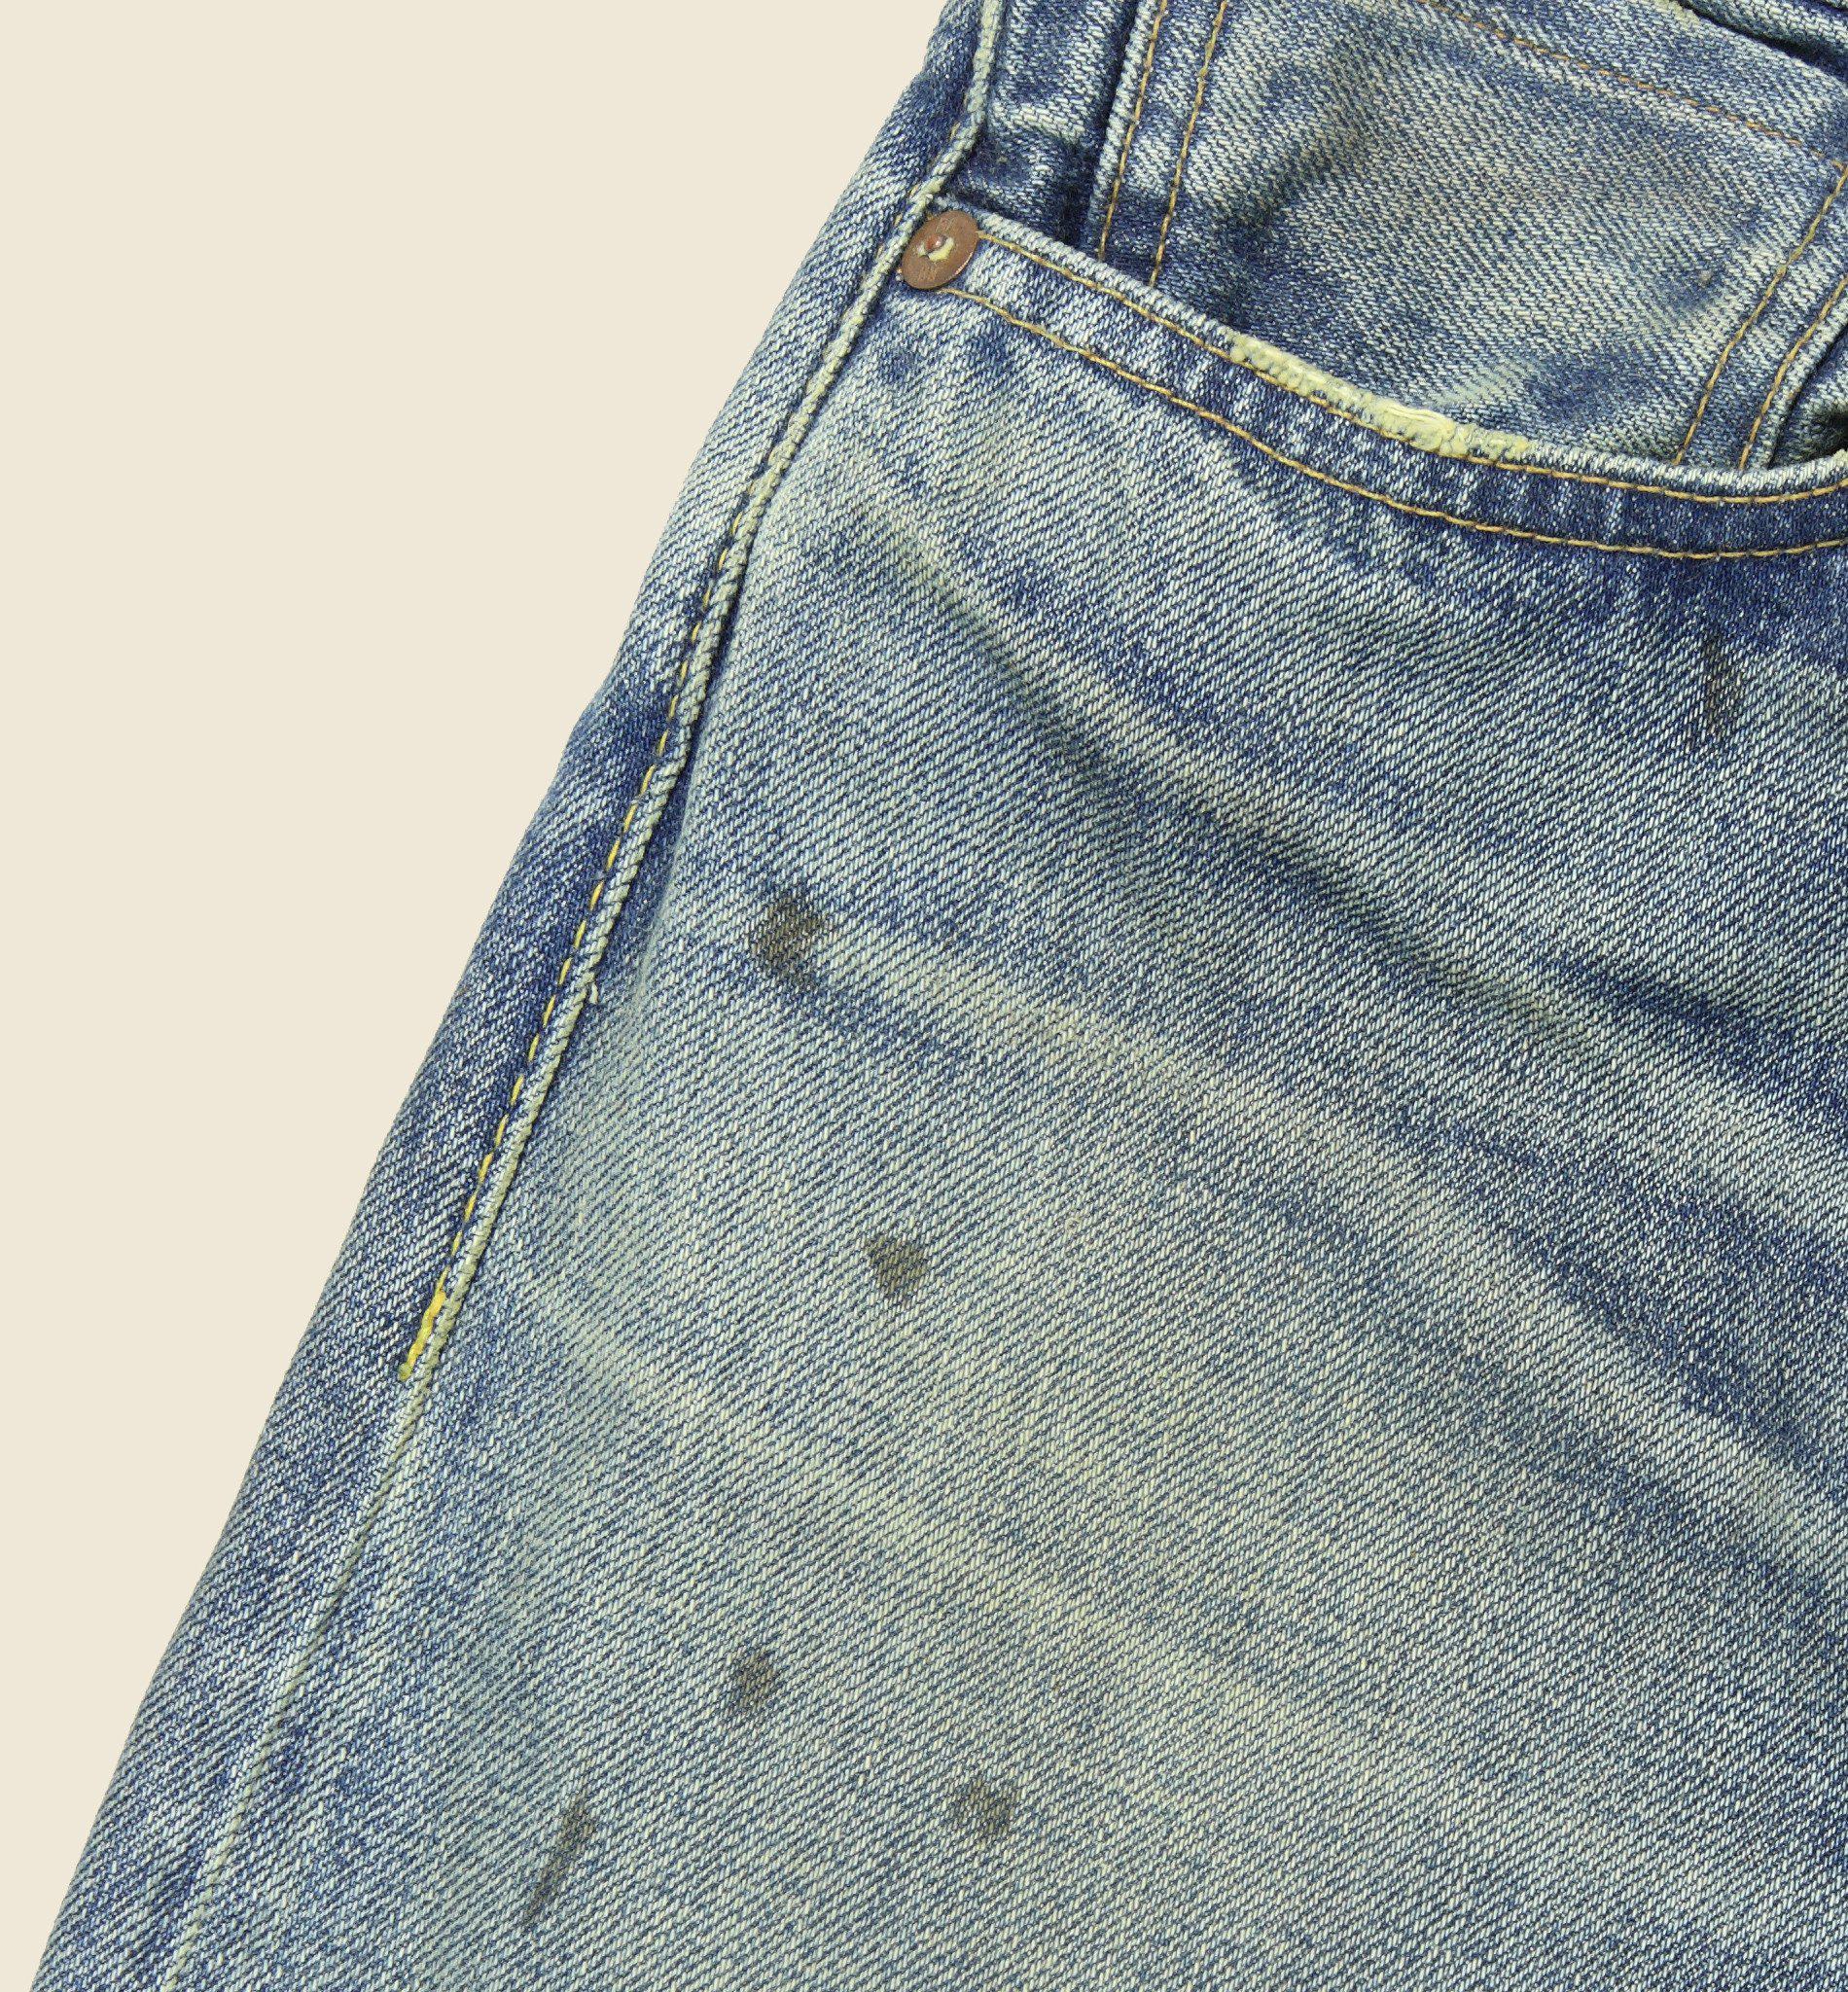 RRL Cotton Low Straight Jean - Midland Wash in Denim (Blue) for Men - Lyst